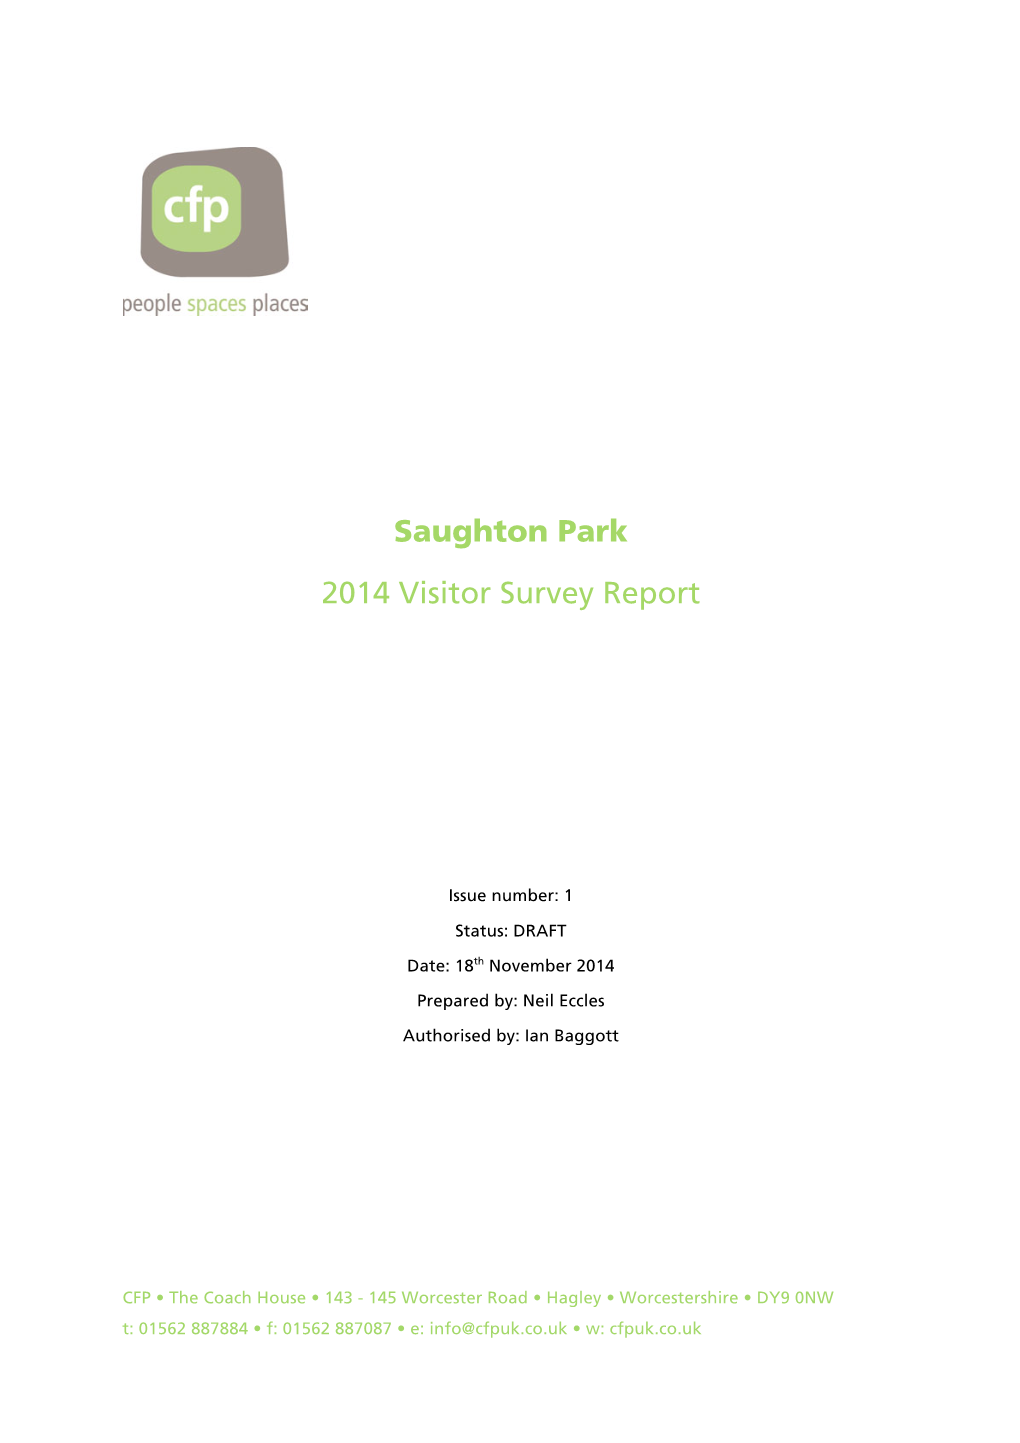 Saughton Park 2014 Visitor Survey Report